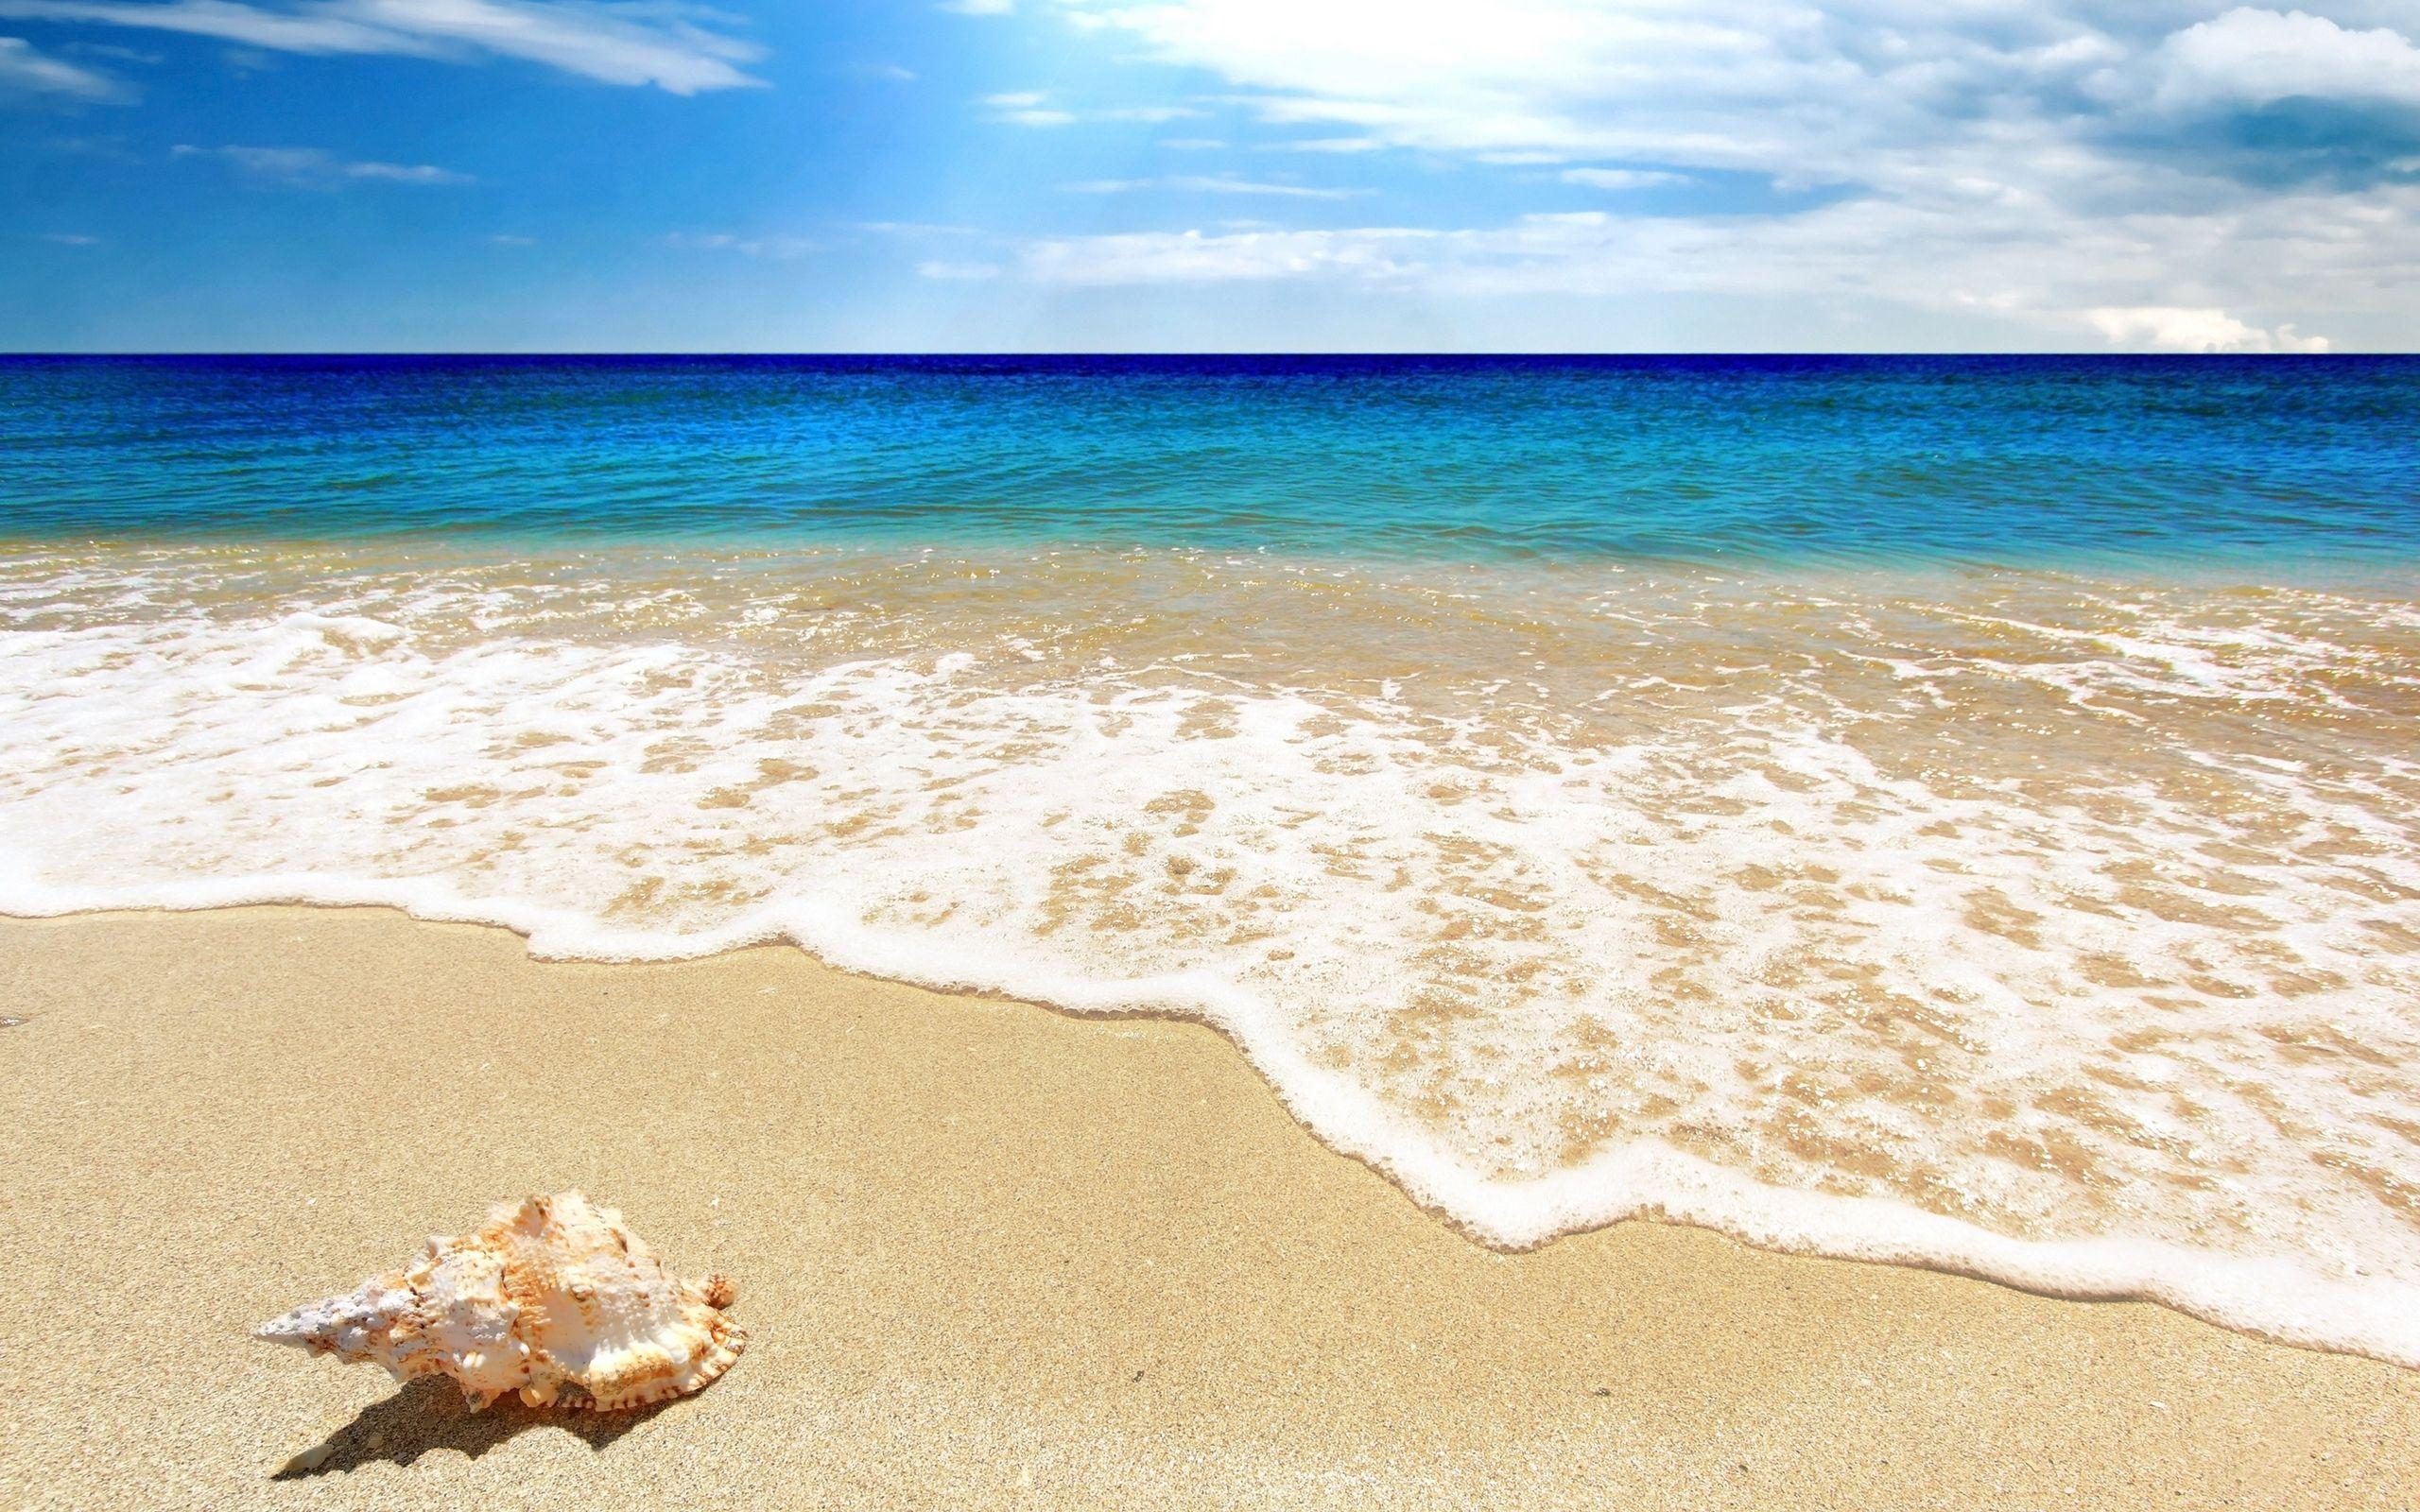 Its beach beach beach. Море песок. Пляж. Море пляж. Песочный пляж.